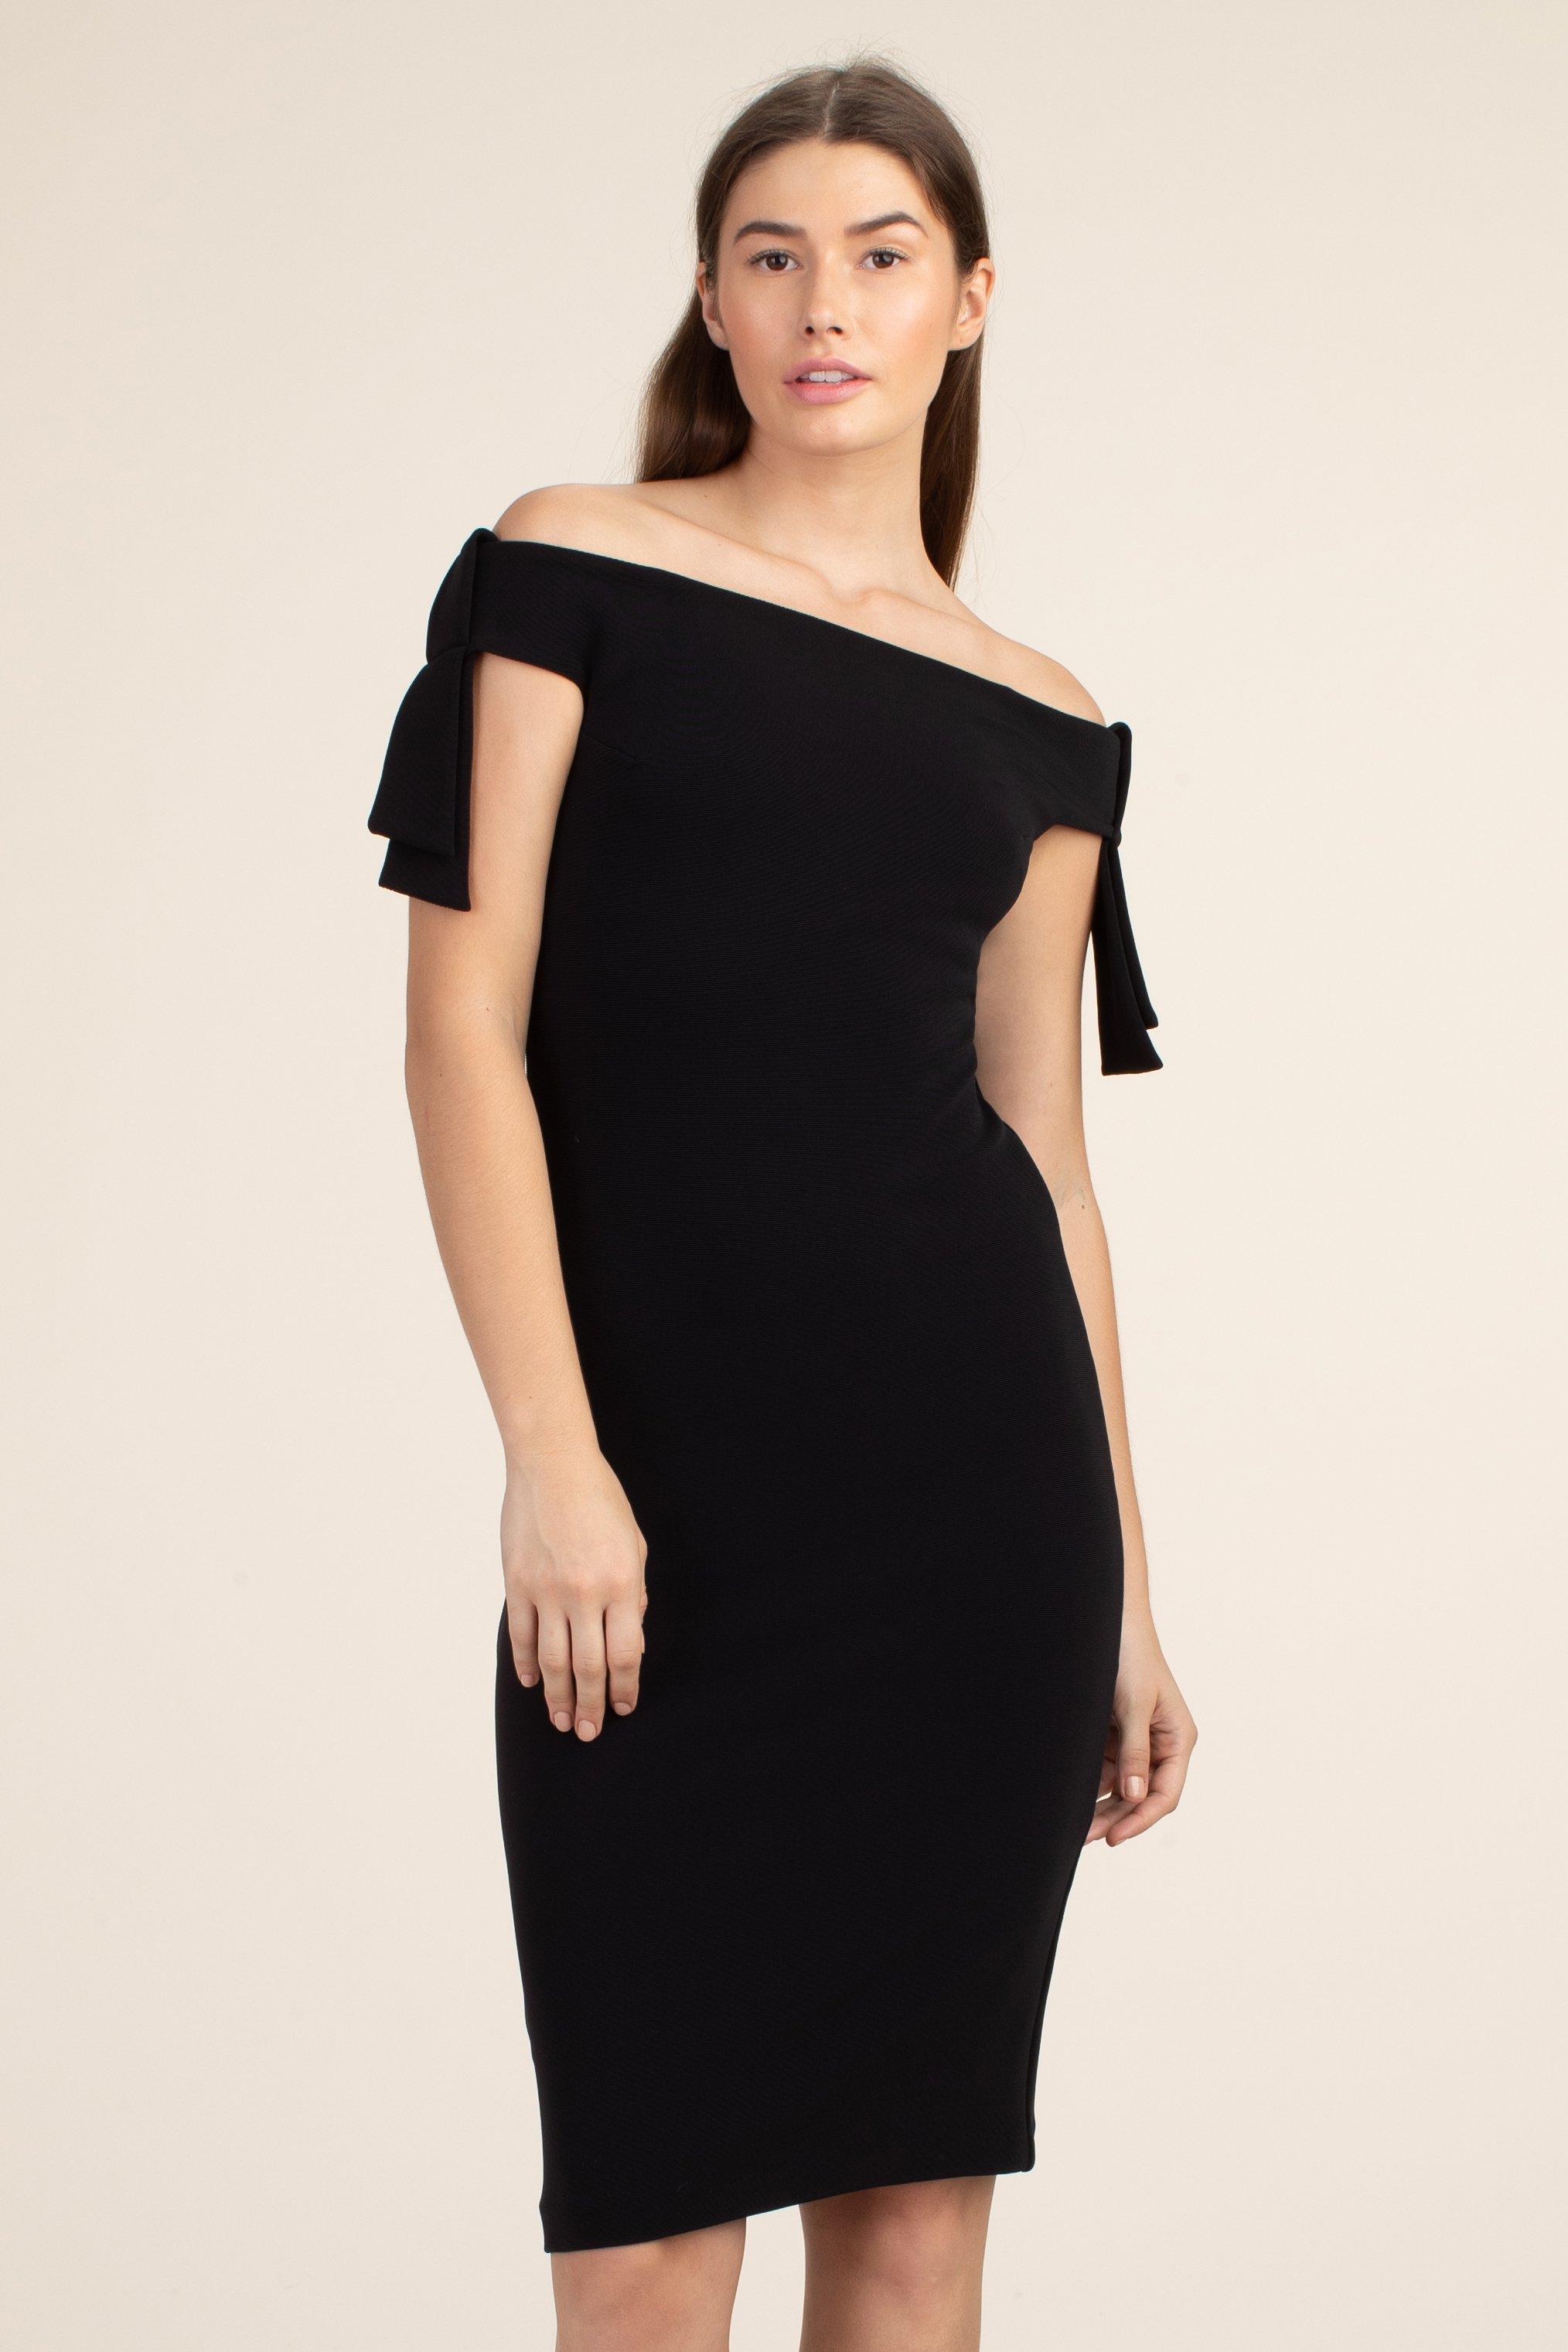 Trina Turk Synthetic Brisk Dress in Black - Lyst